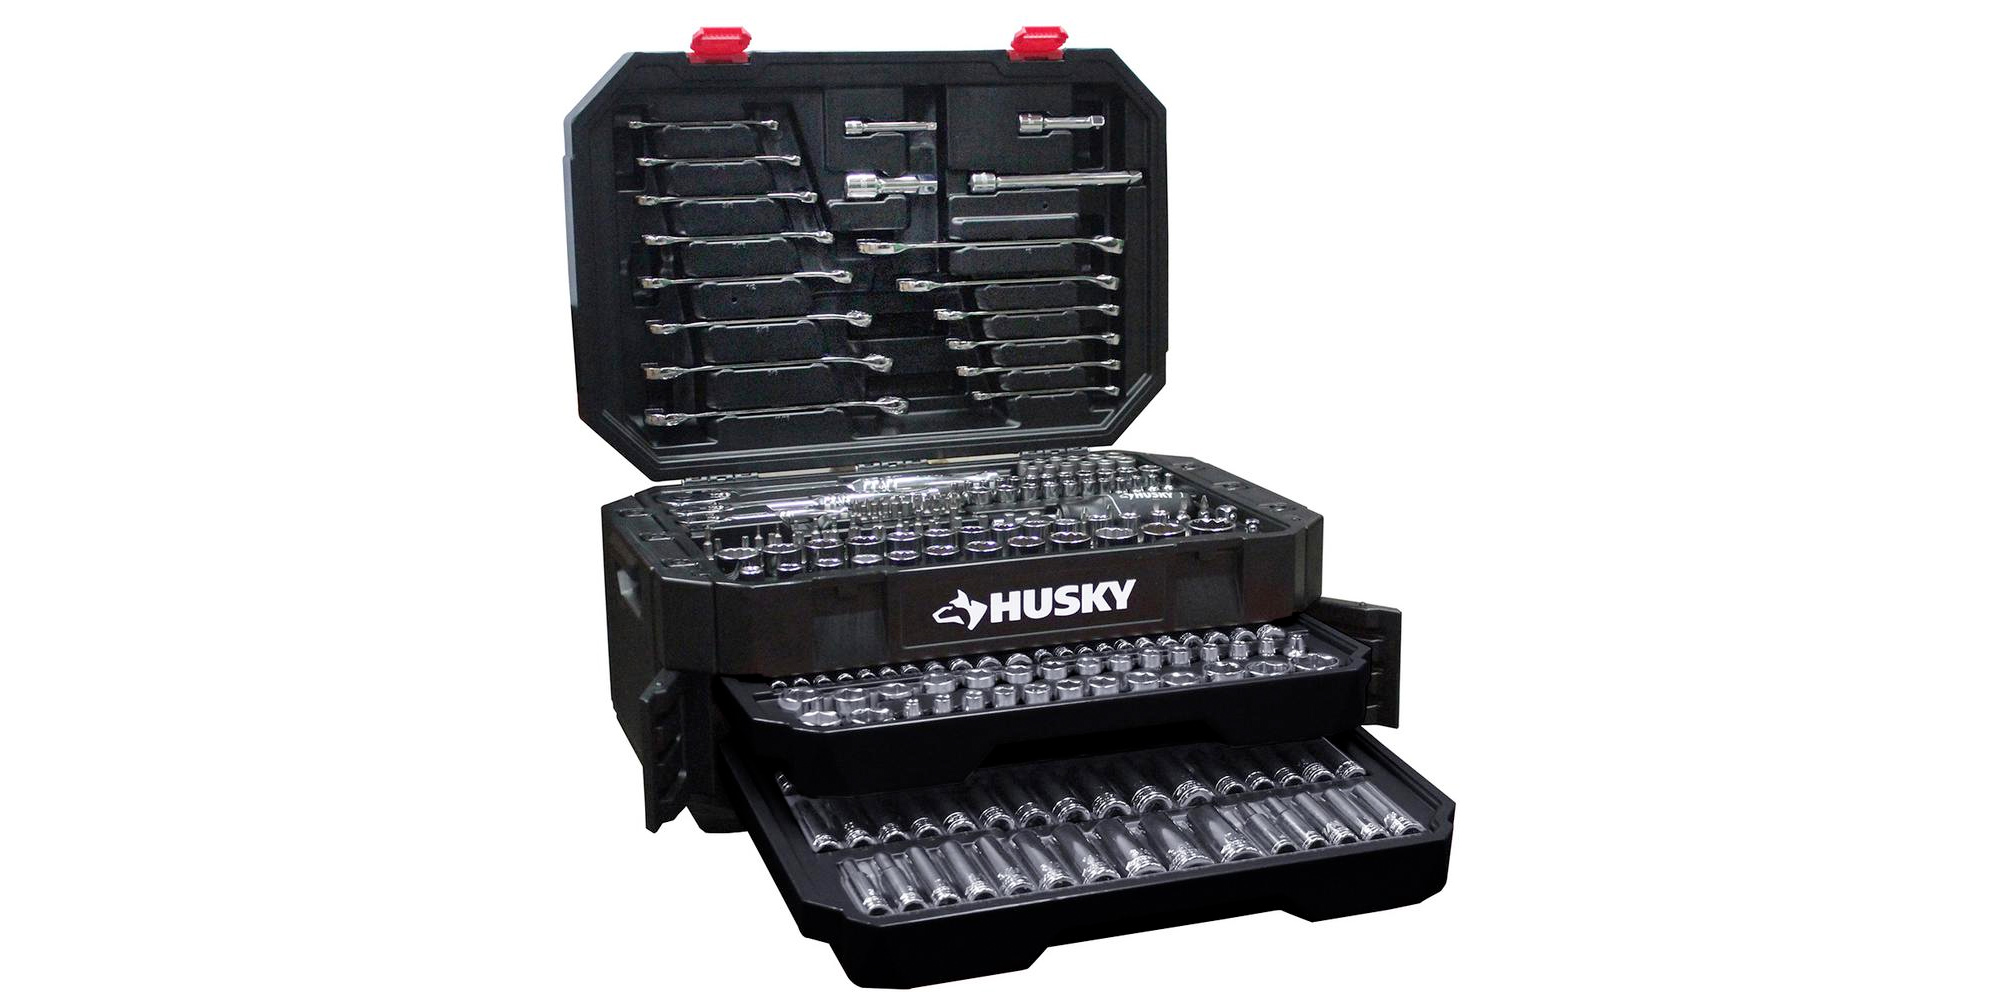 Husky 290-pc. mechanics tool set ships to your door with a